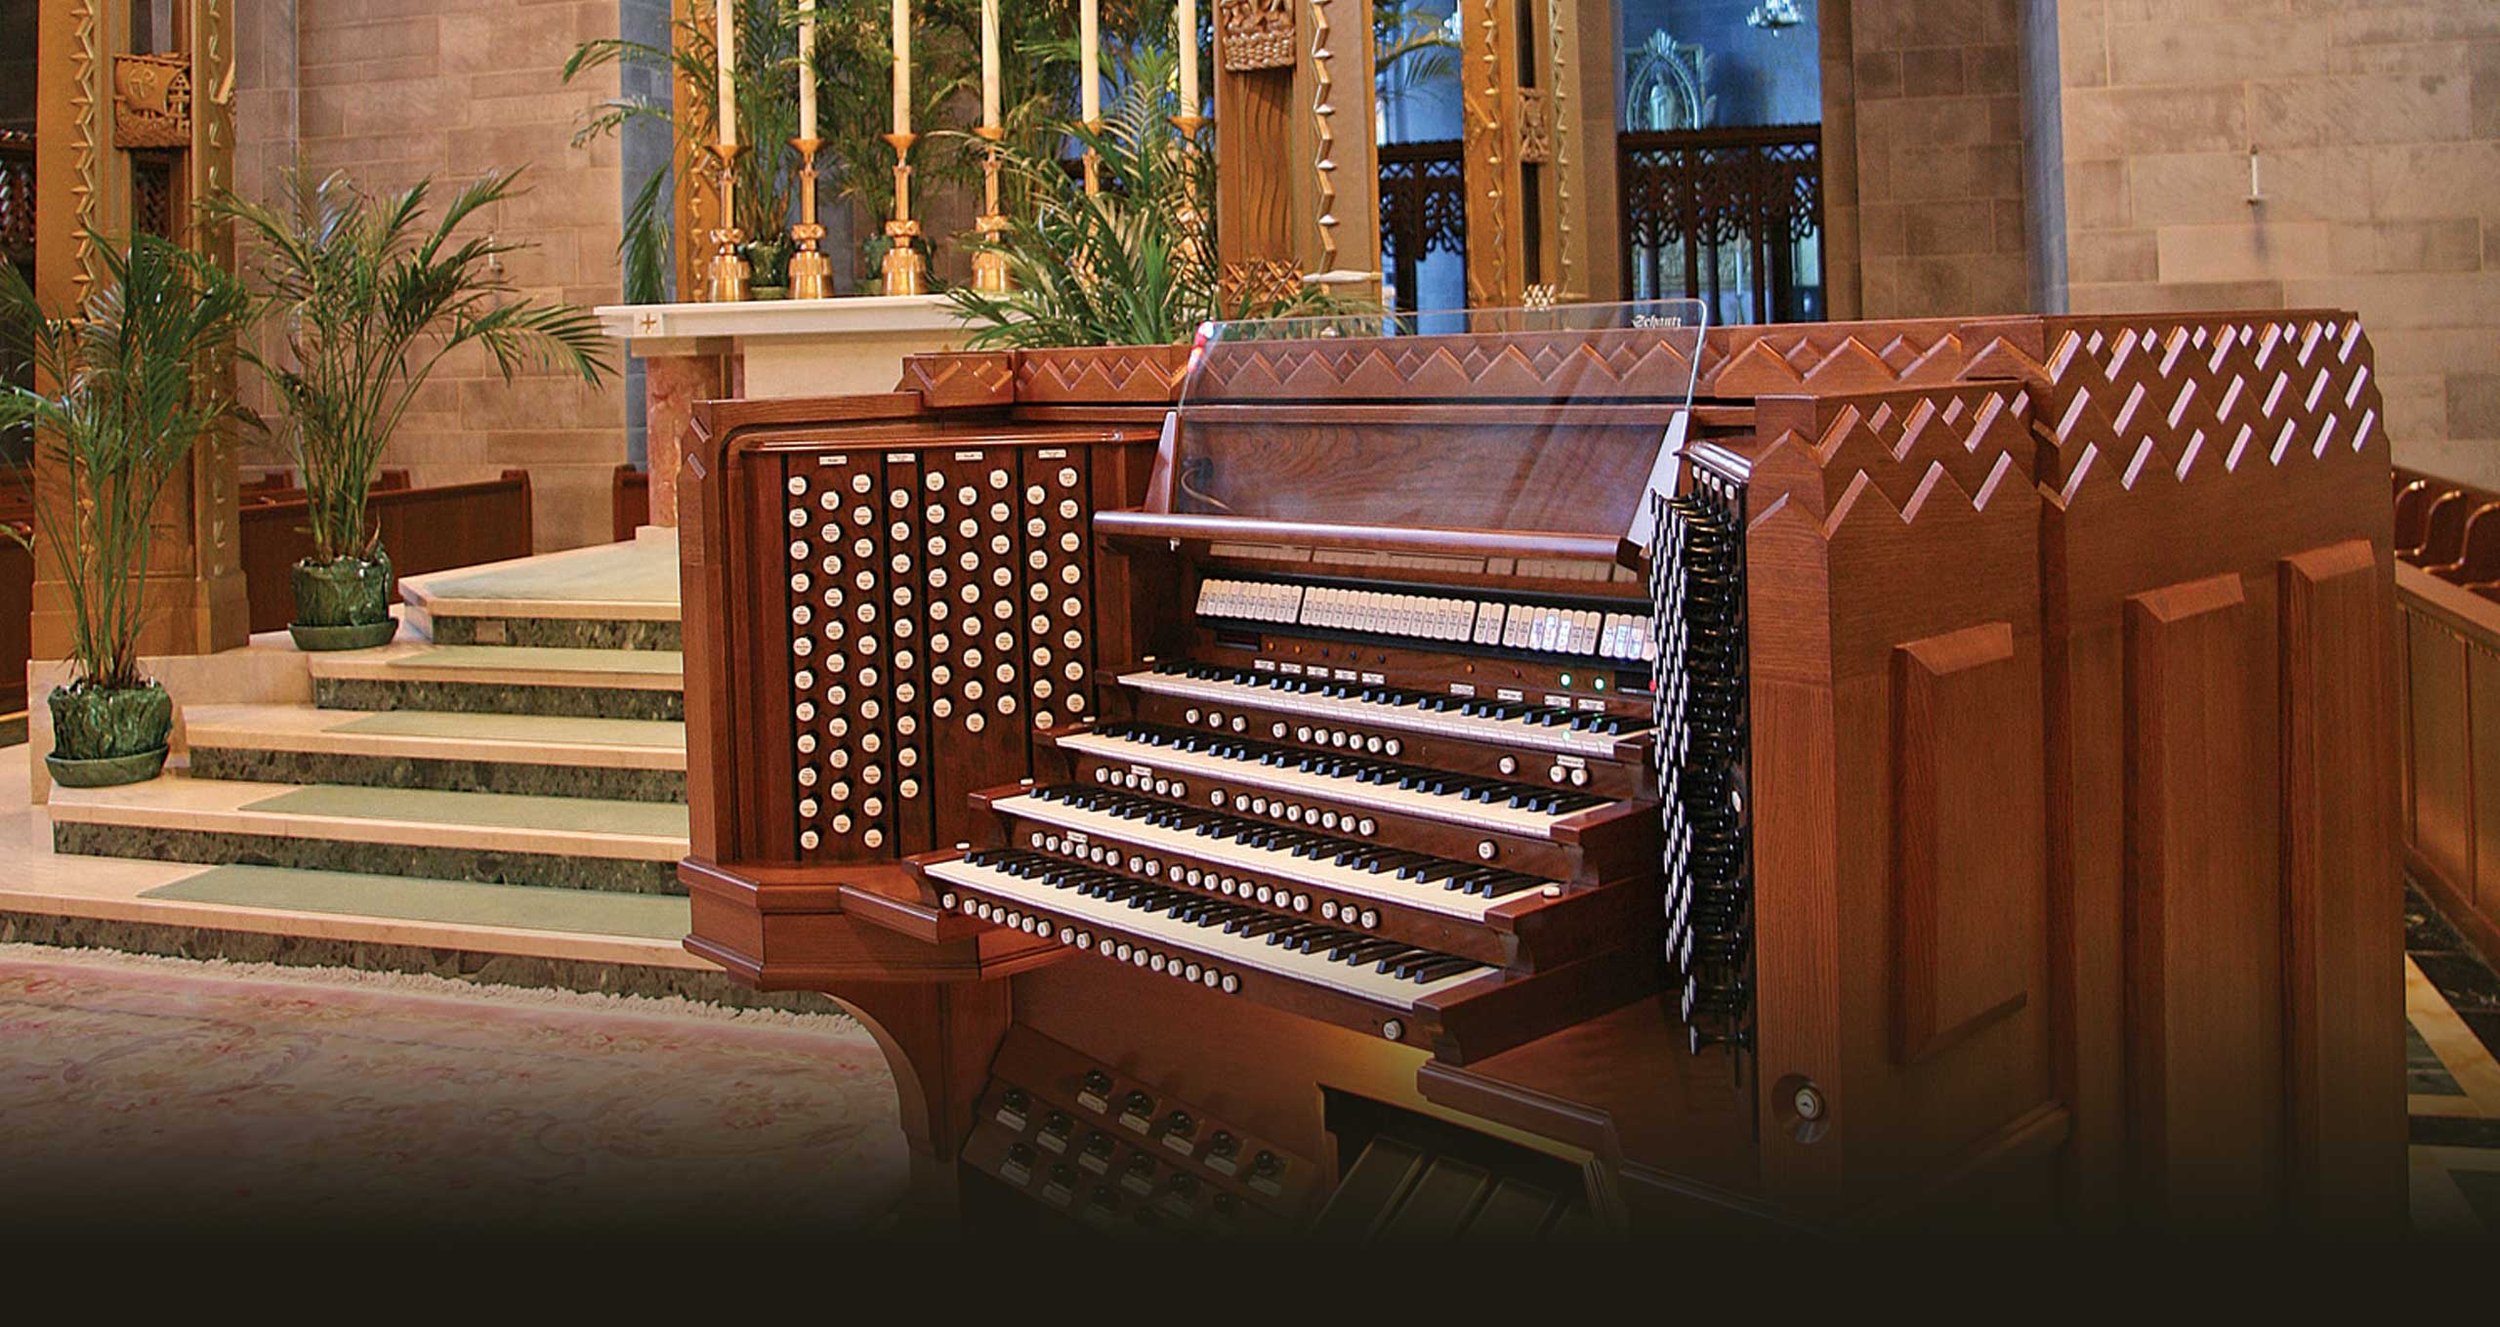 Schantz Organ Co. Opus 2275 (2007), Cathedral of Mary Our Queen